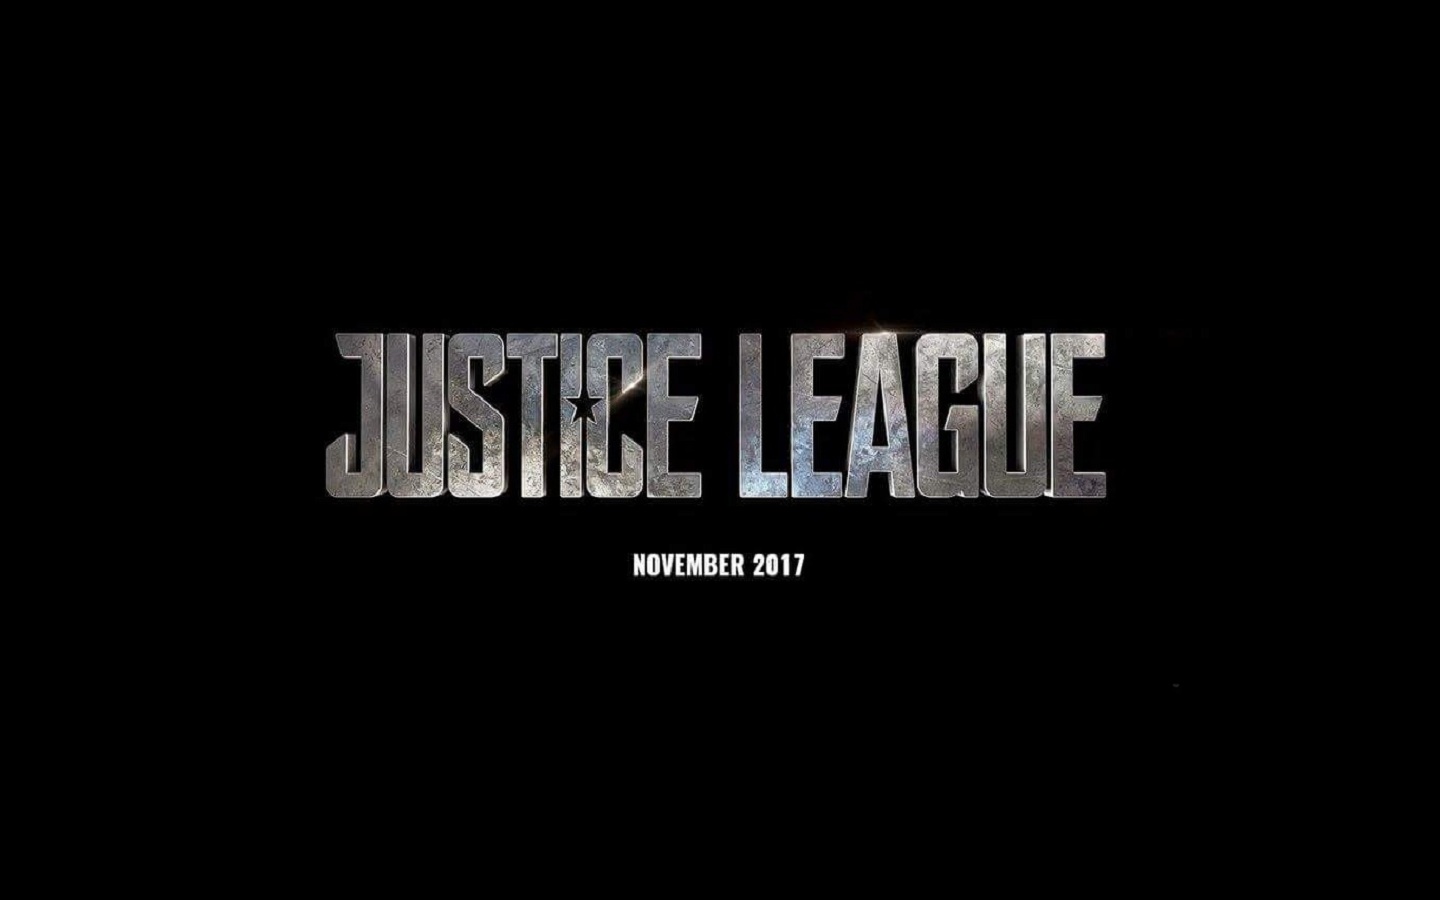 Justice League movie logo wallpaper